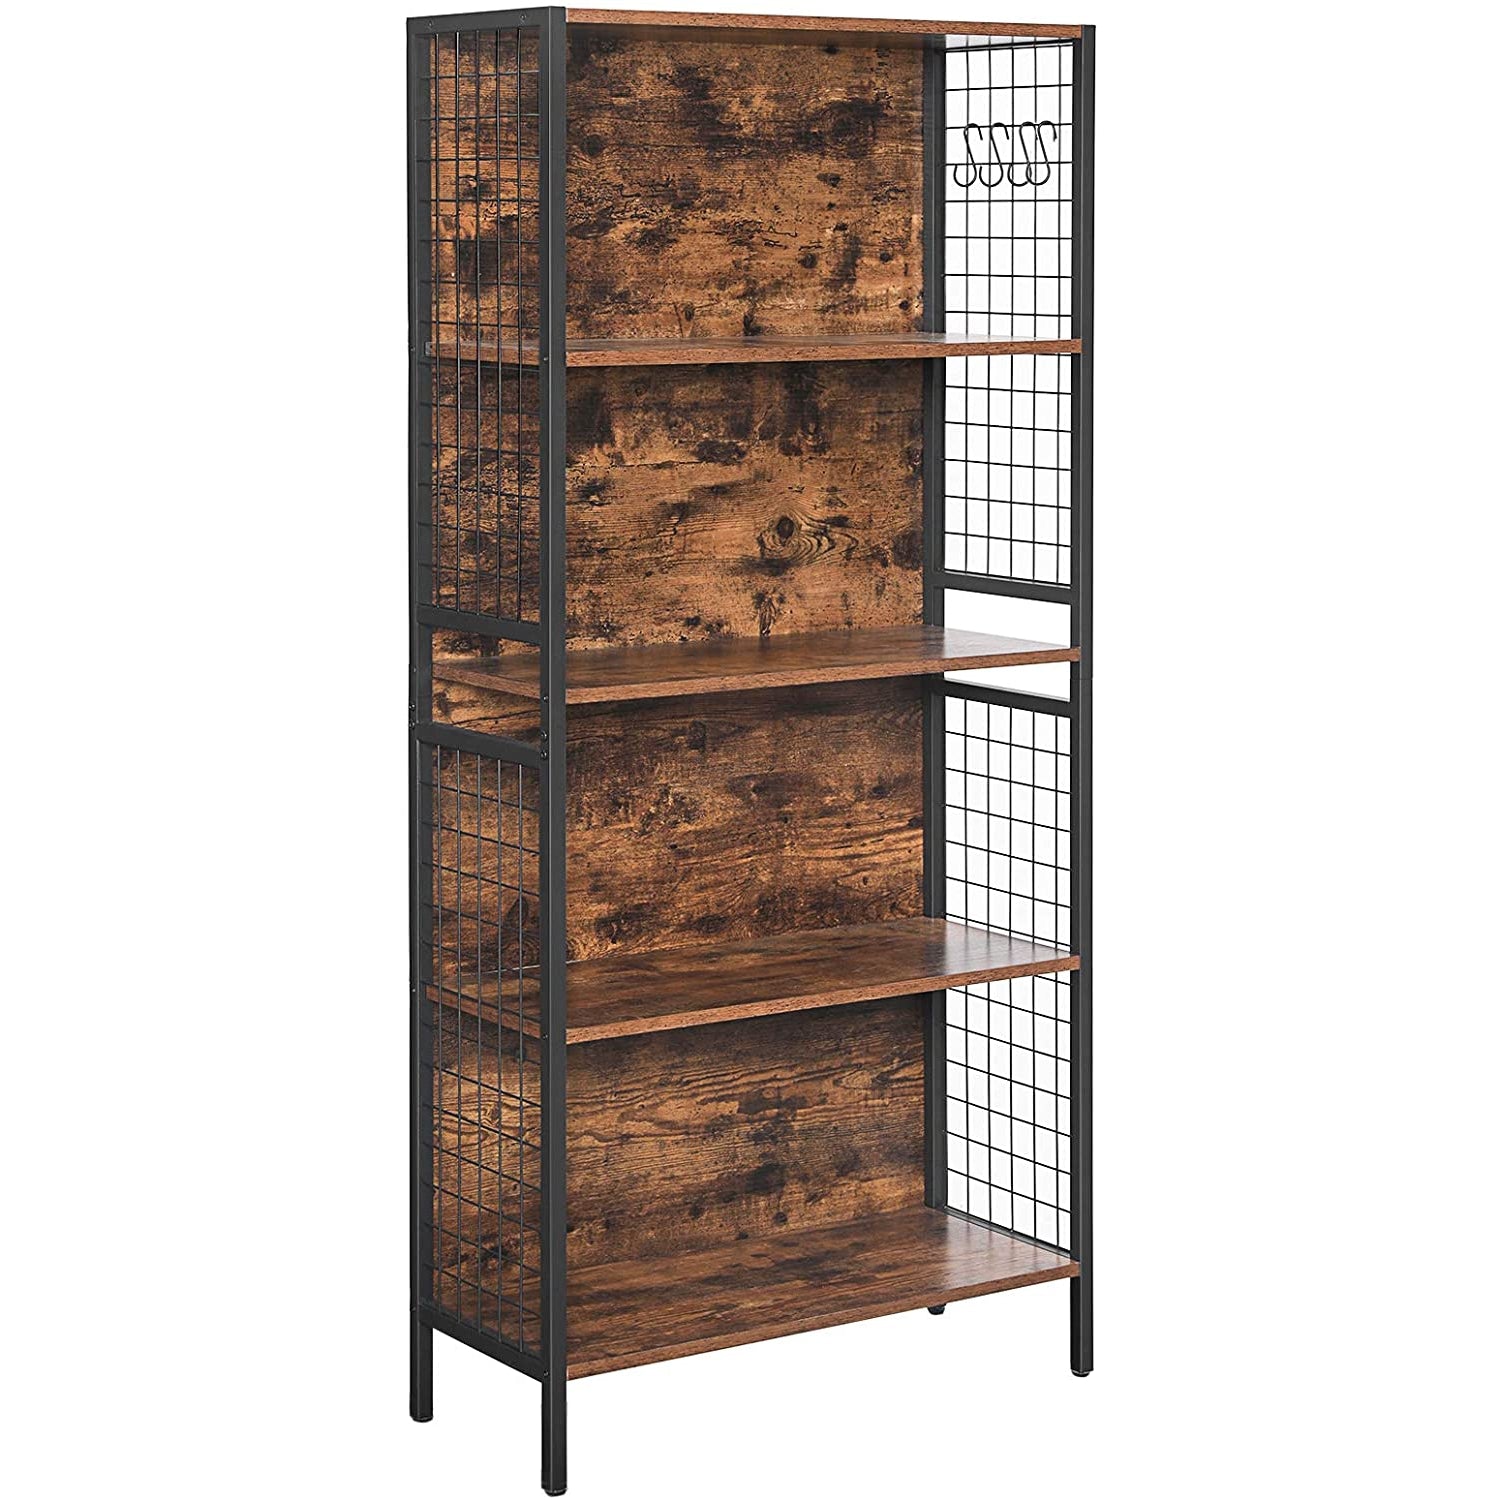 Nancy's Oxford Bookcase - Vintage Wooden Cabinet - Storage Cabinet - Cabinets - 74 x 30 x 155 cm